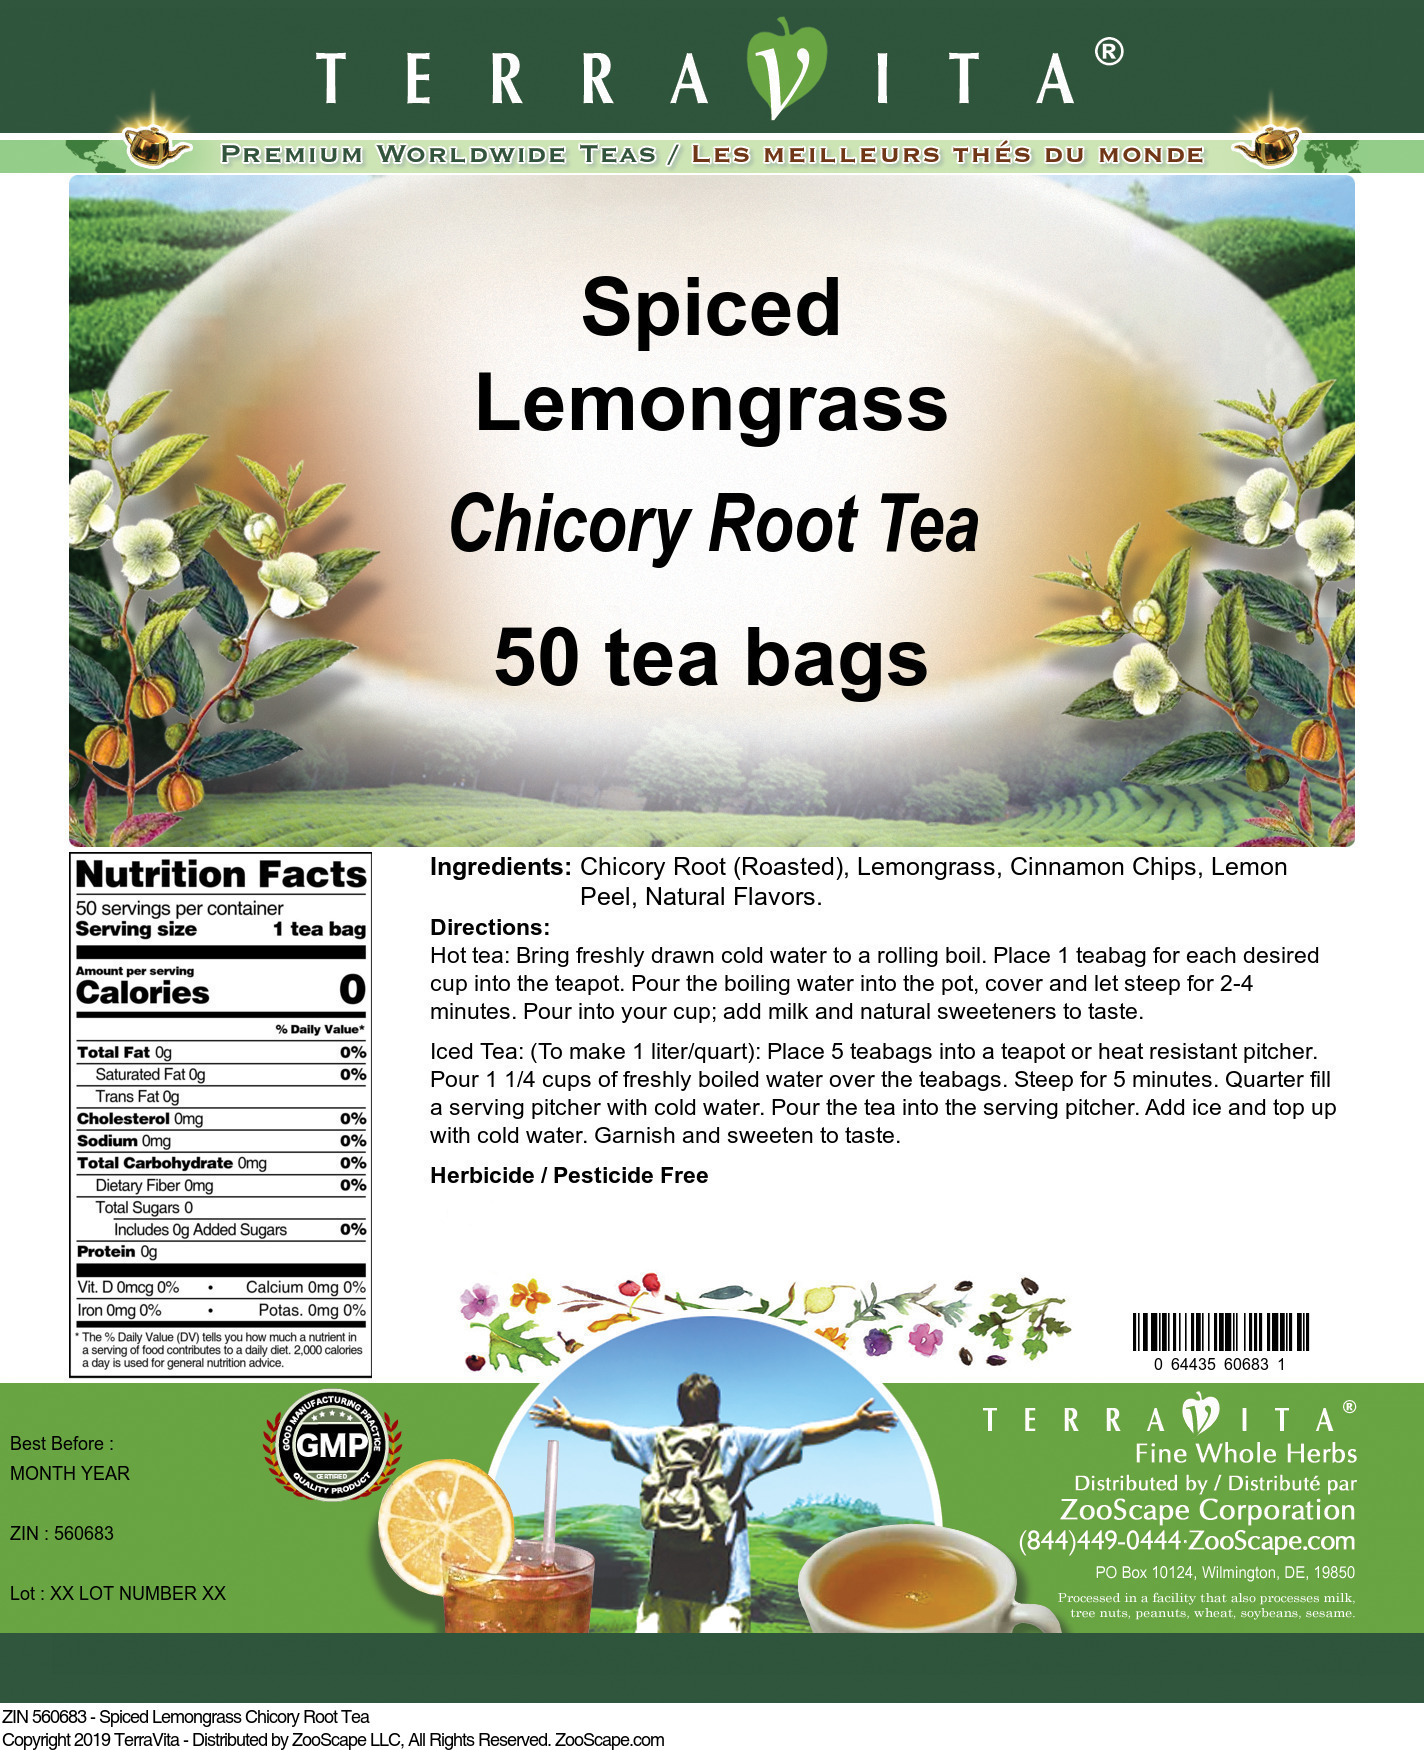 Spiced Lemongrass Chicory Root Tea - Label